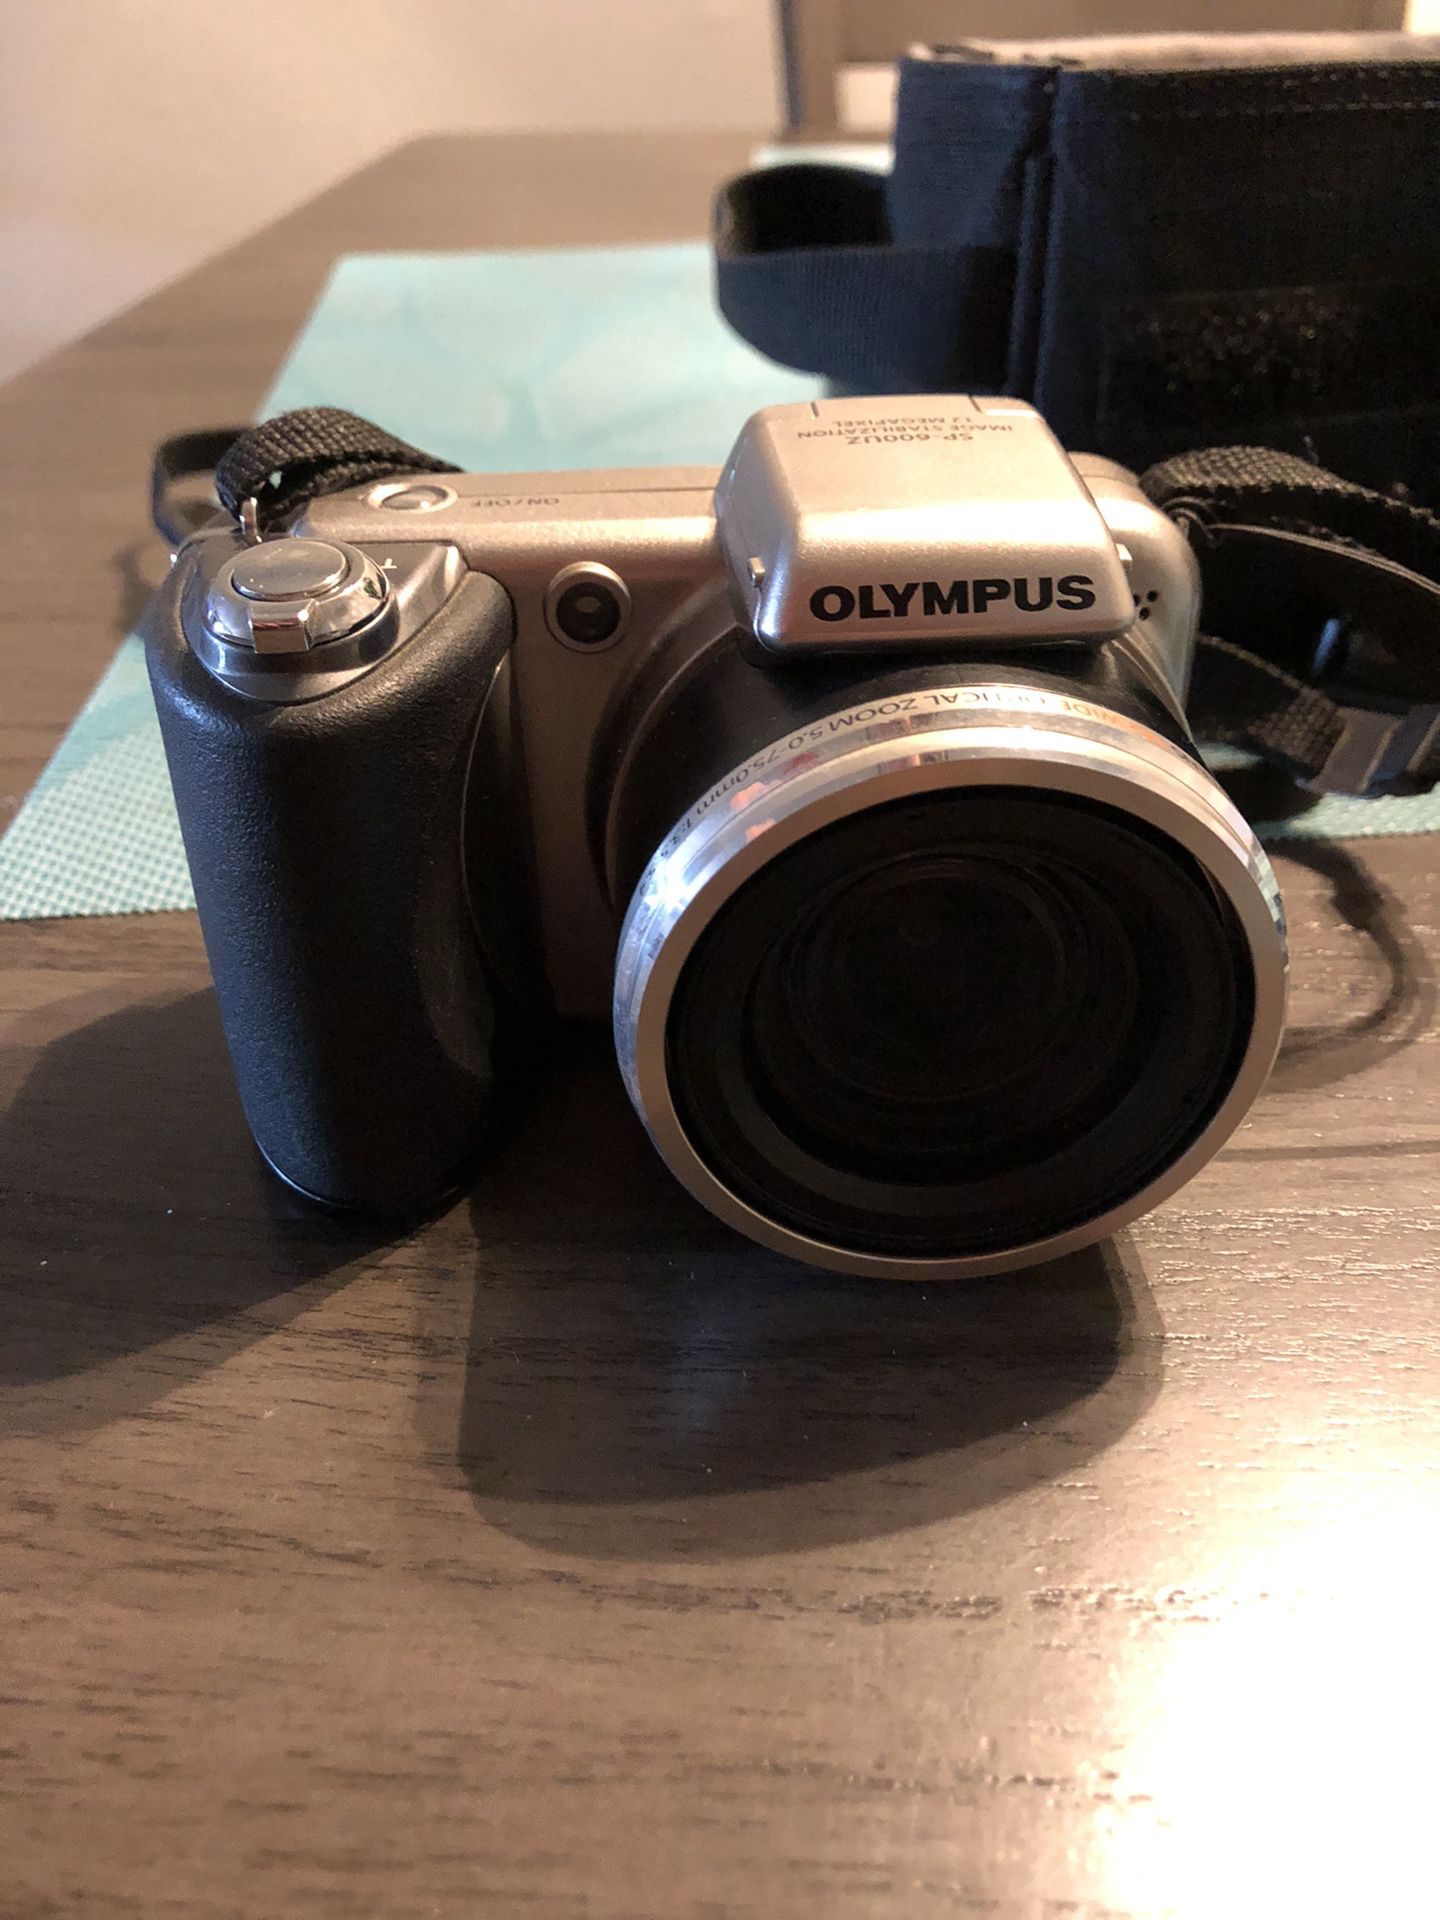 Olympus SP-600UZ 12.0 MP Compact Digital Camera - Silver